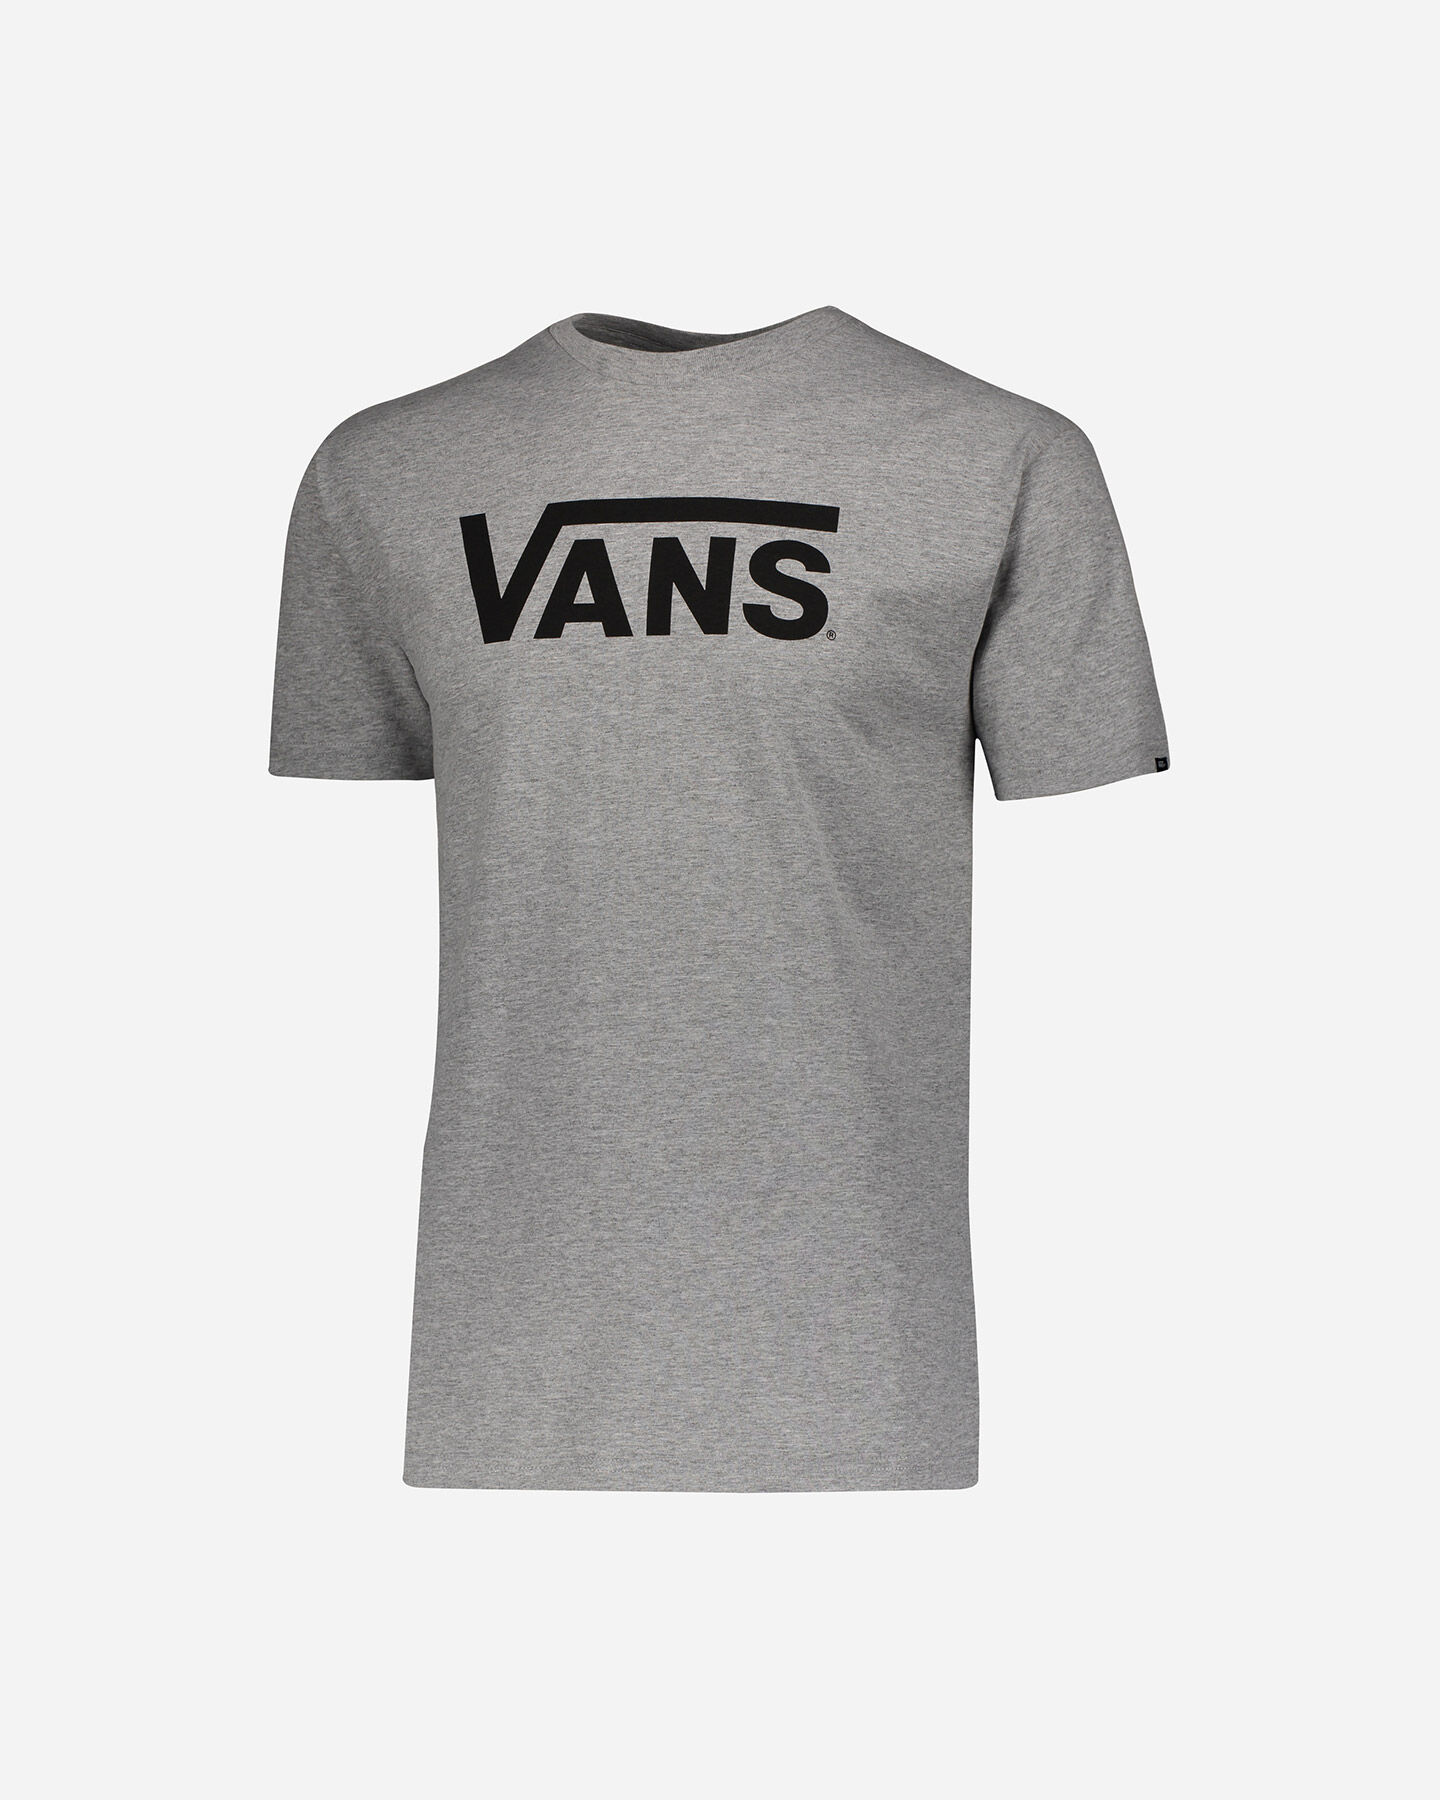  T-Shirt VANS LOGO M S4027419|GRIGIO|XS scatto 0